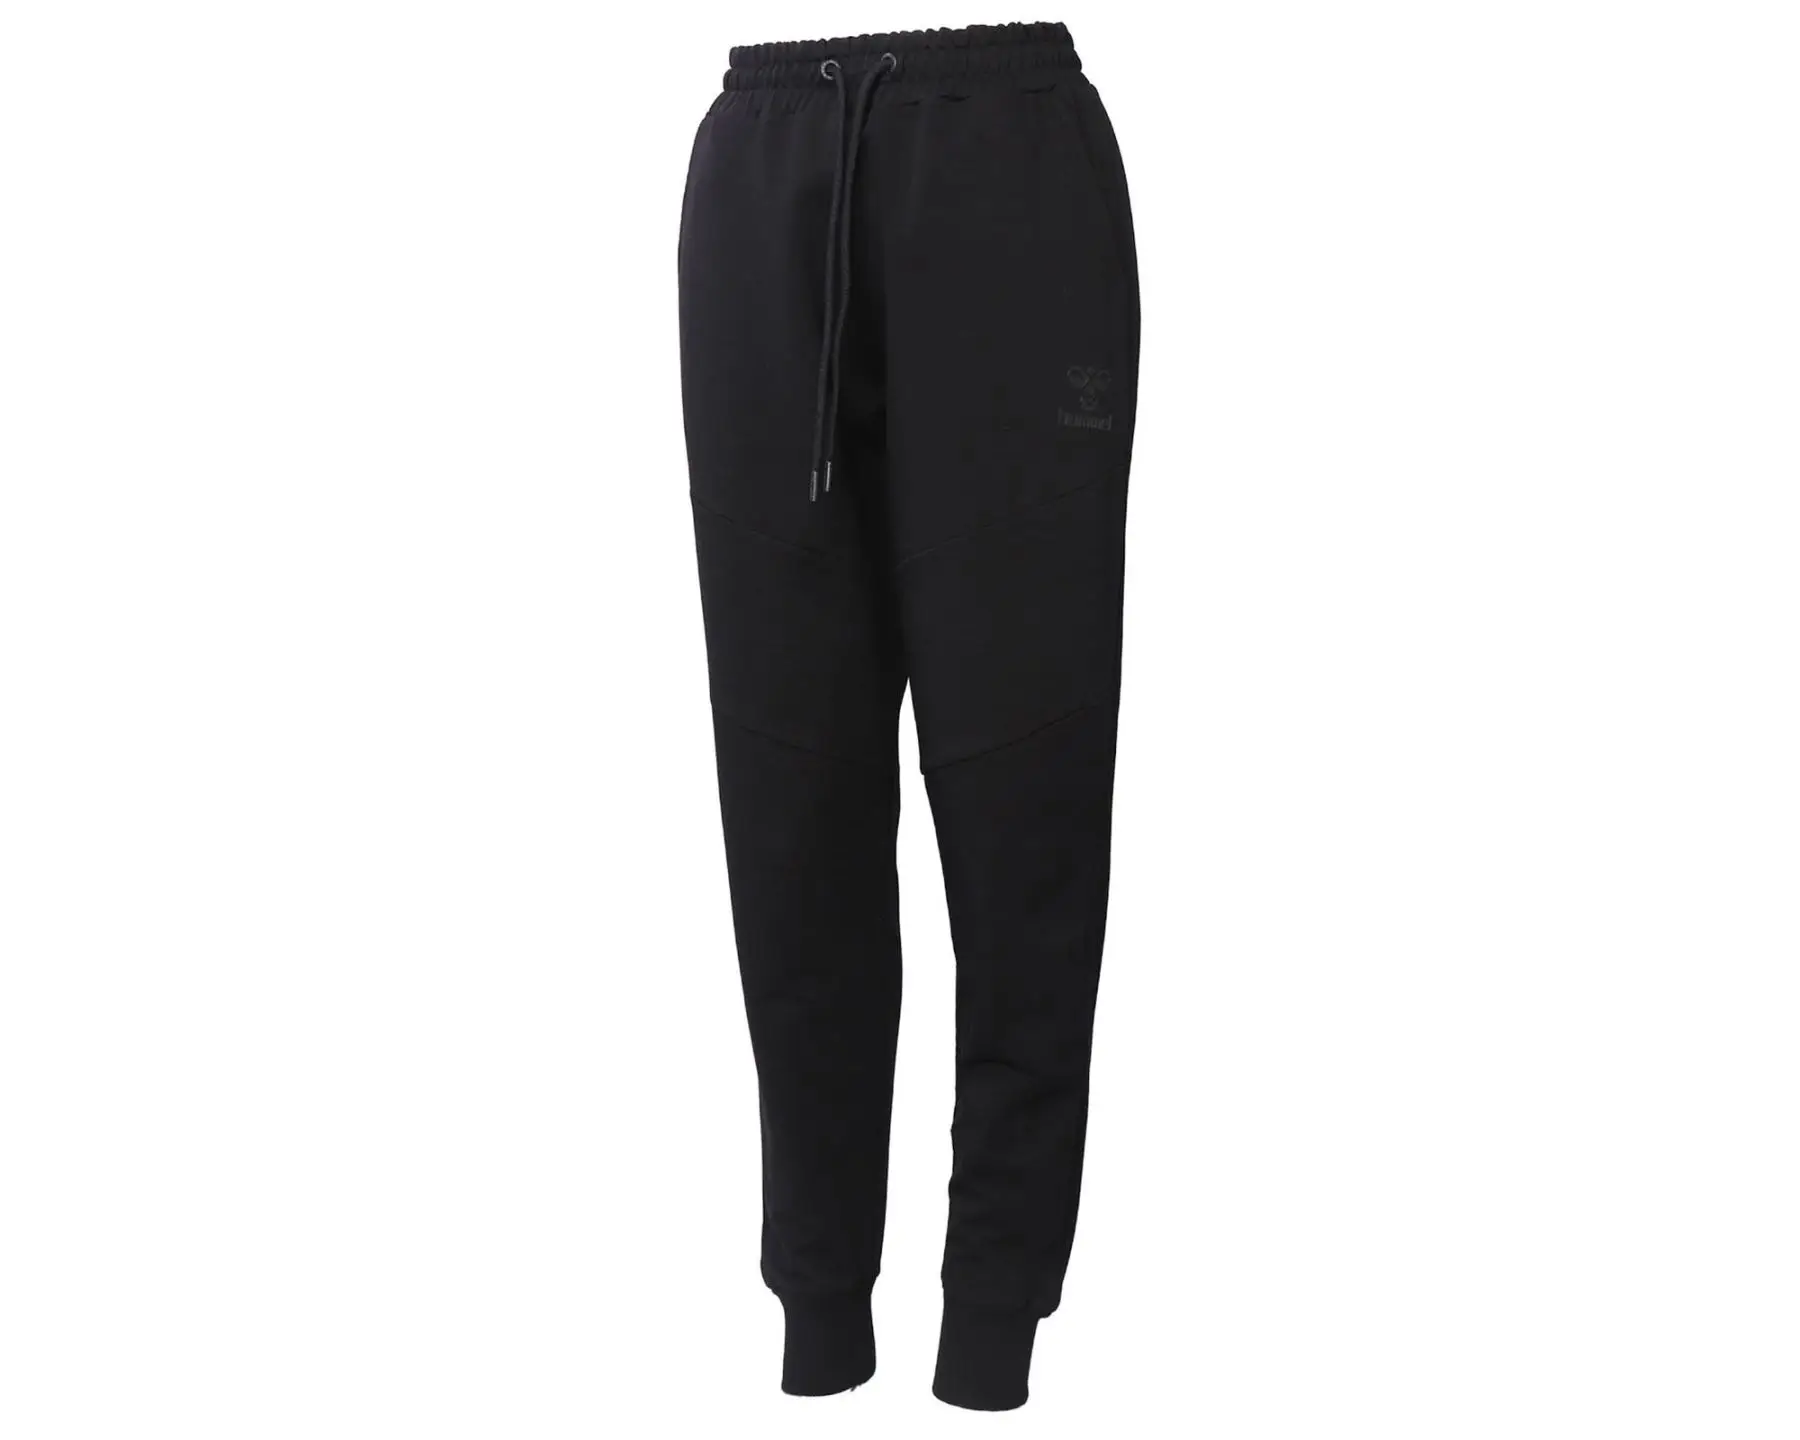 Hummel Original men's Casual Sweatpants Black Color Gym Training Joggers Running Pant Pants